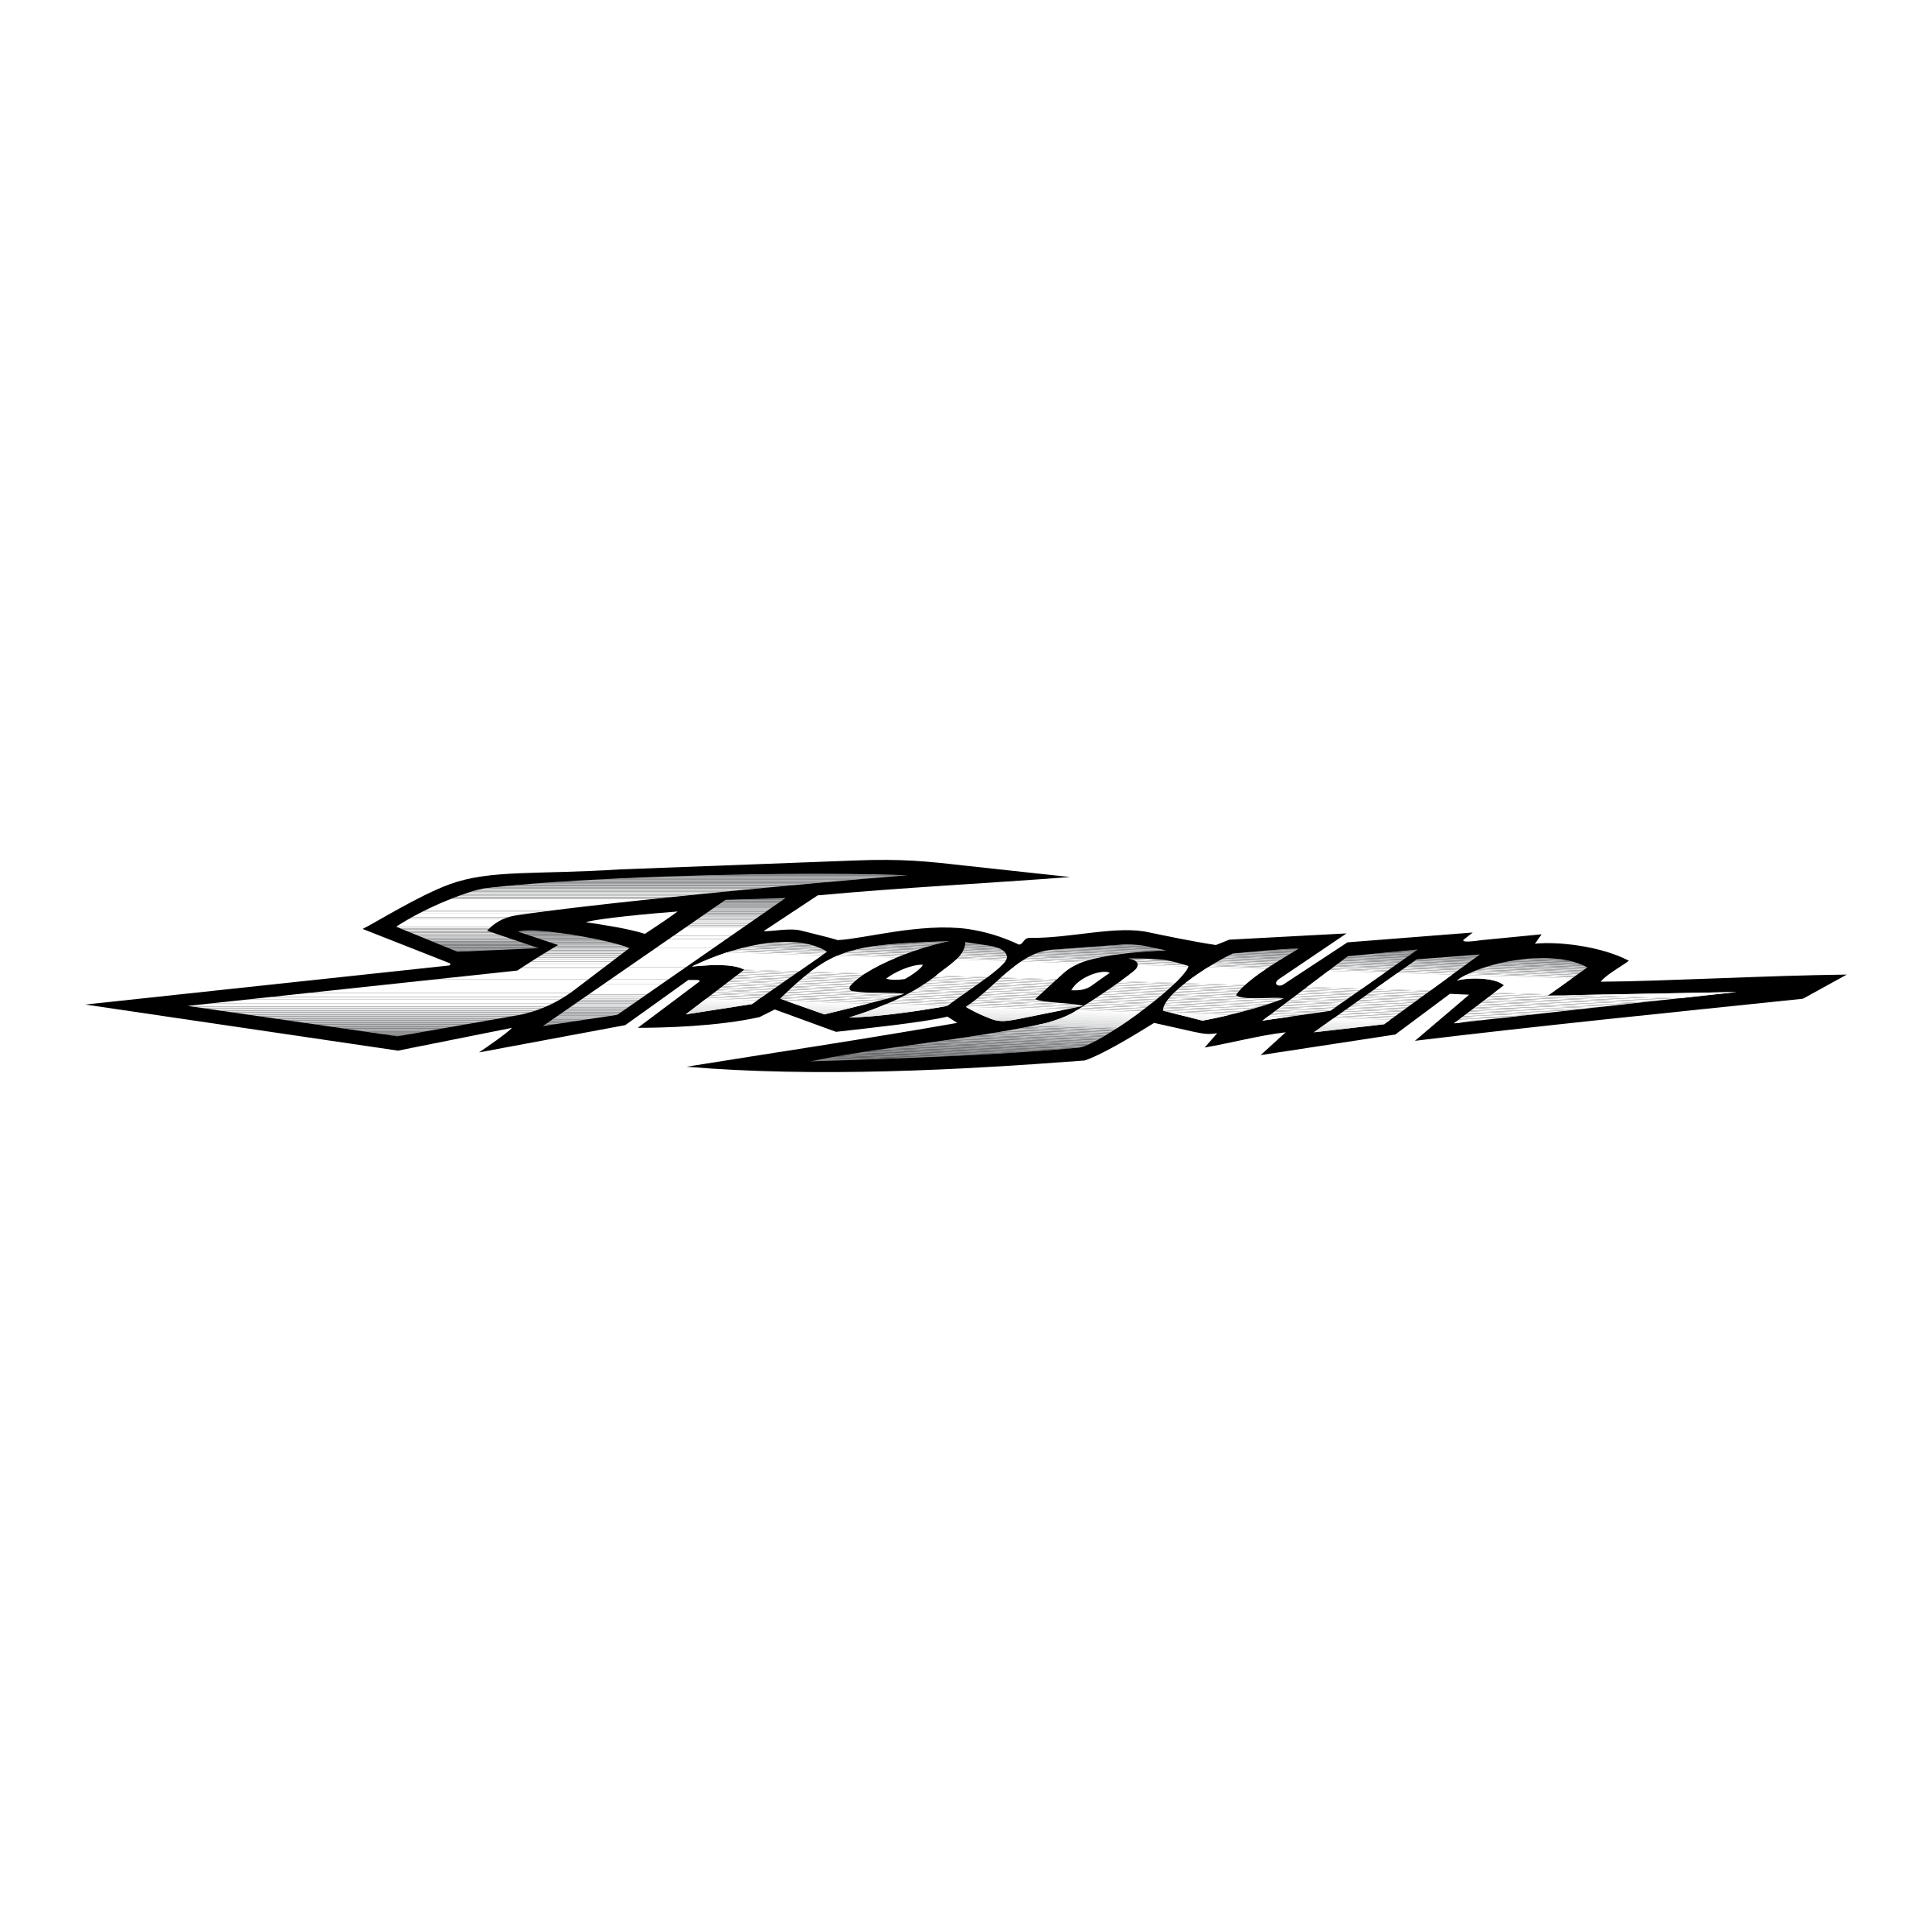 Shogun Logo - Shogun Logo PNG Transparent & SVG Vector - Freebie Supply